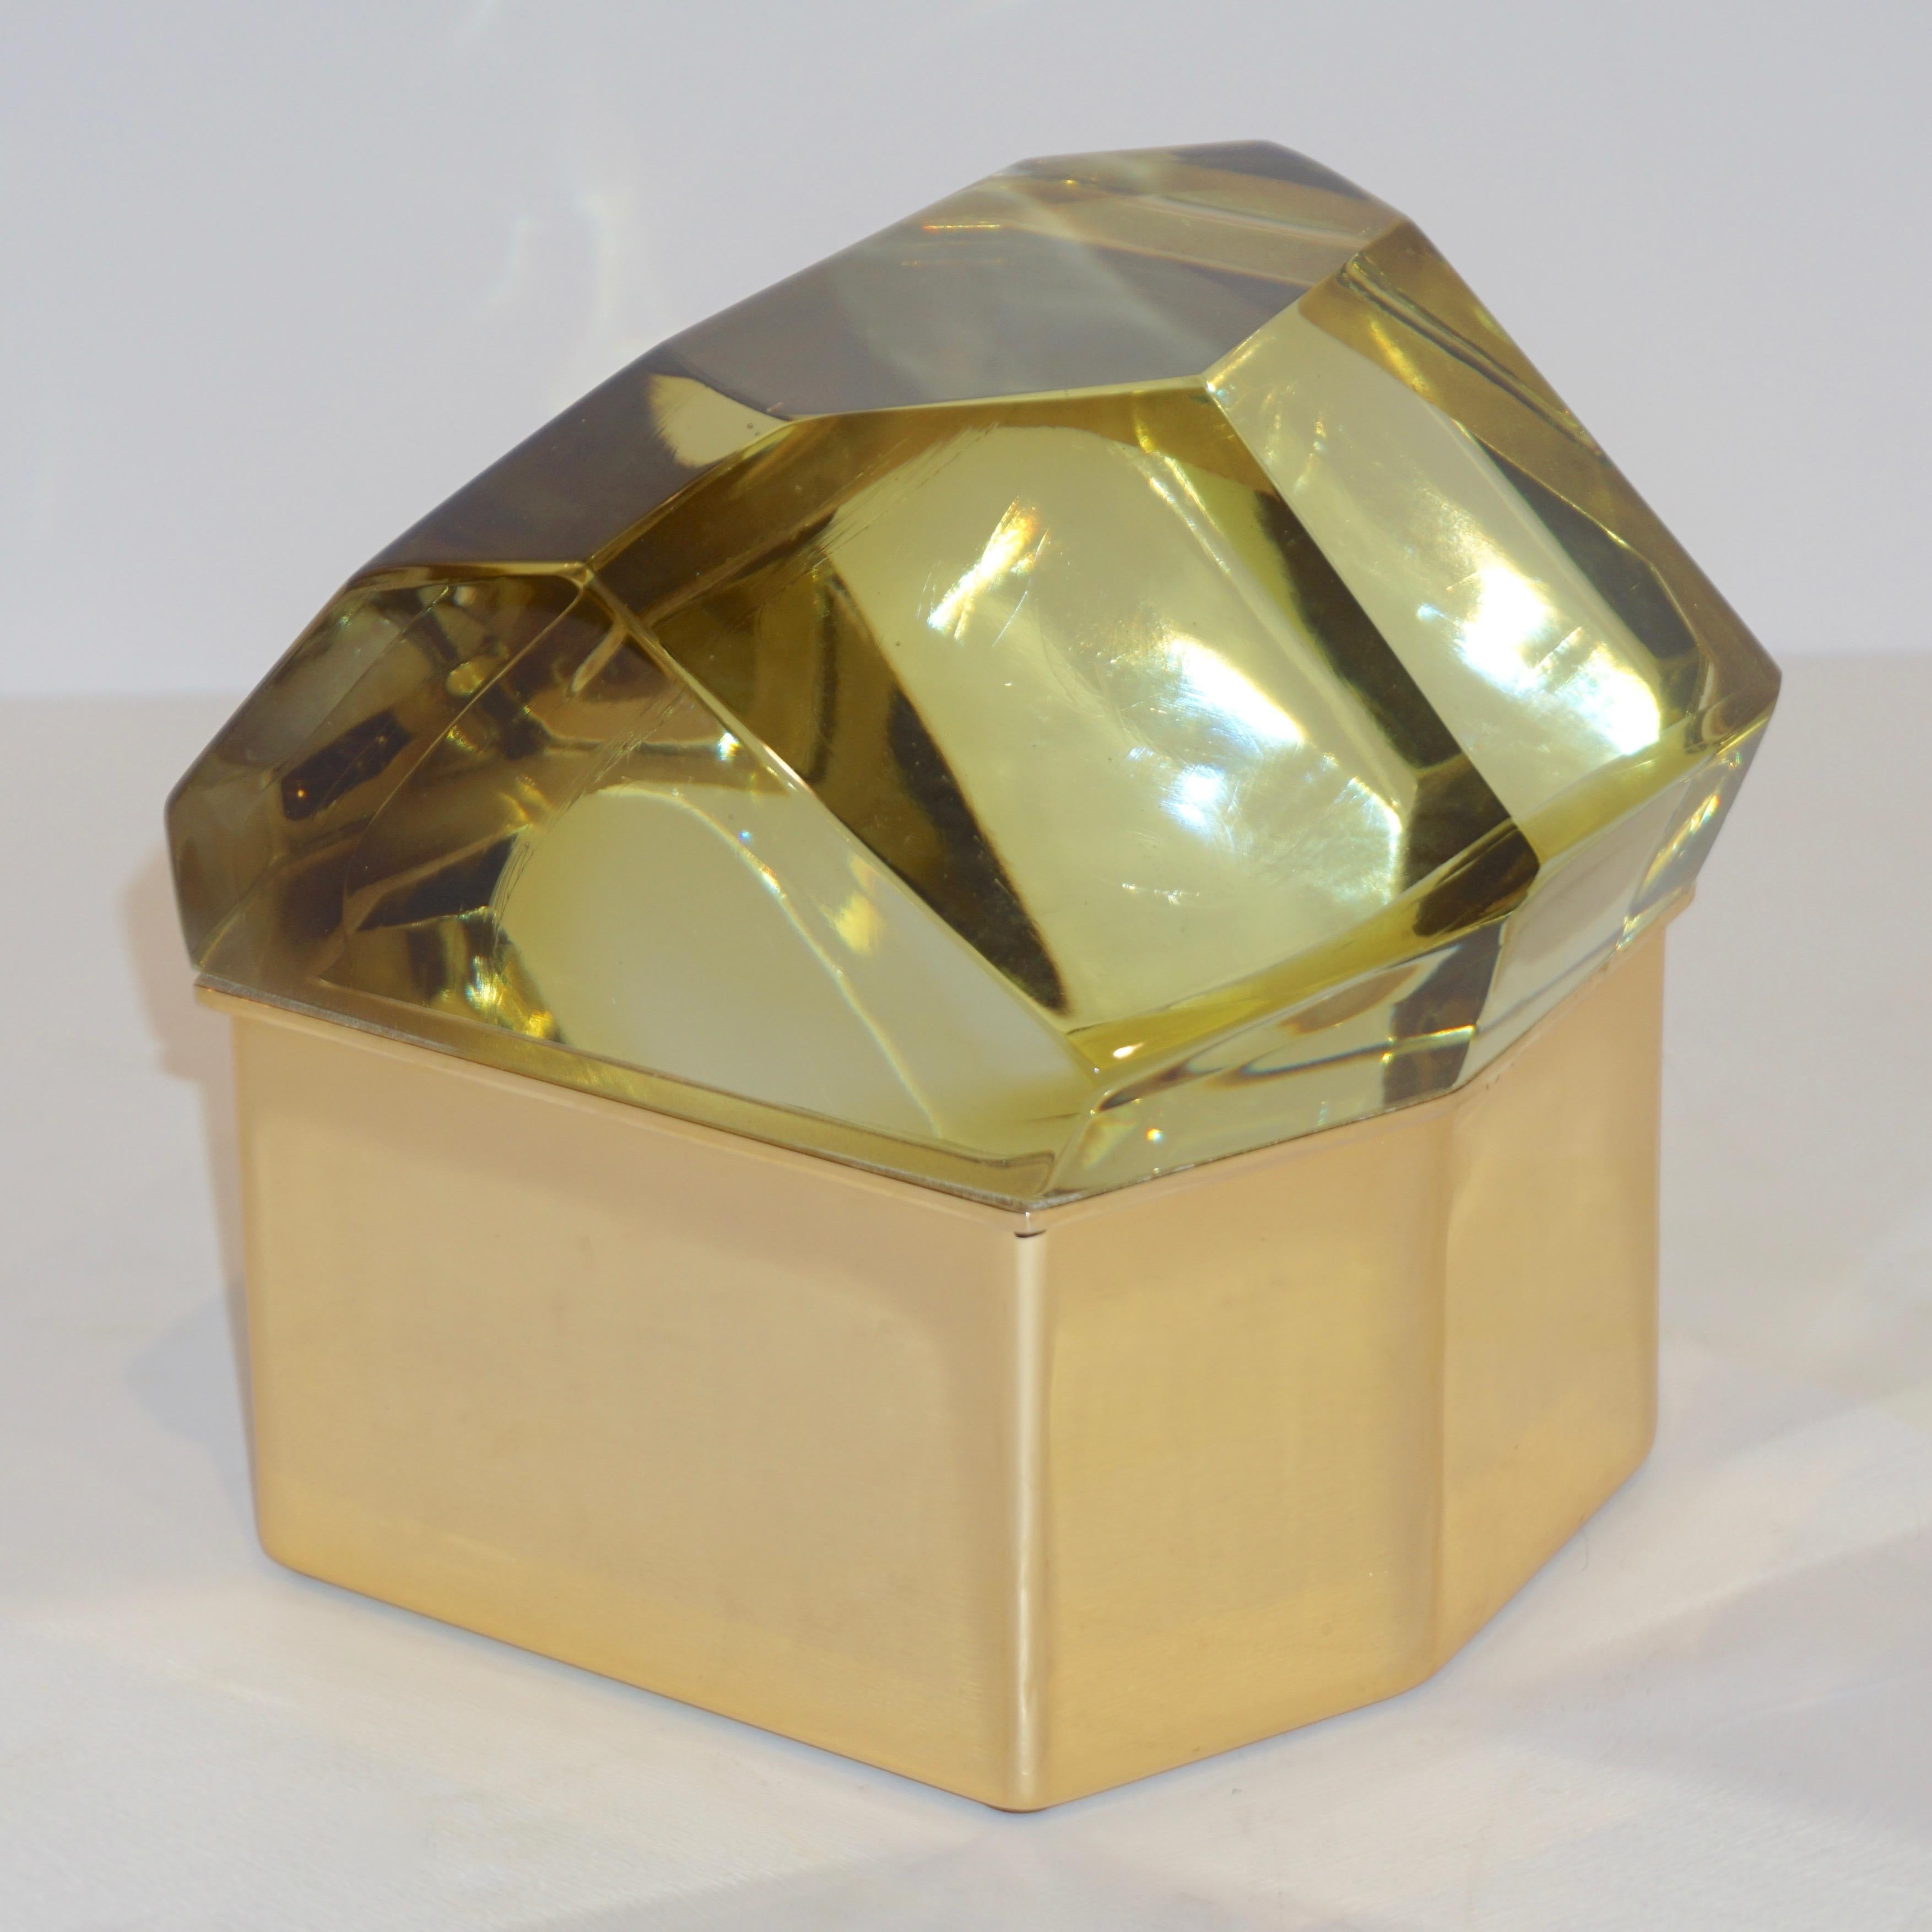 Hand-Crafted Toso Italian Modern Diamond-Shaped Gold Murano Glass and Brass Jewel-Like Box